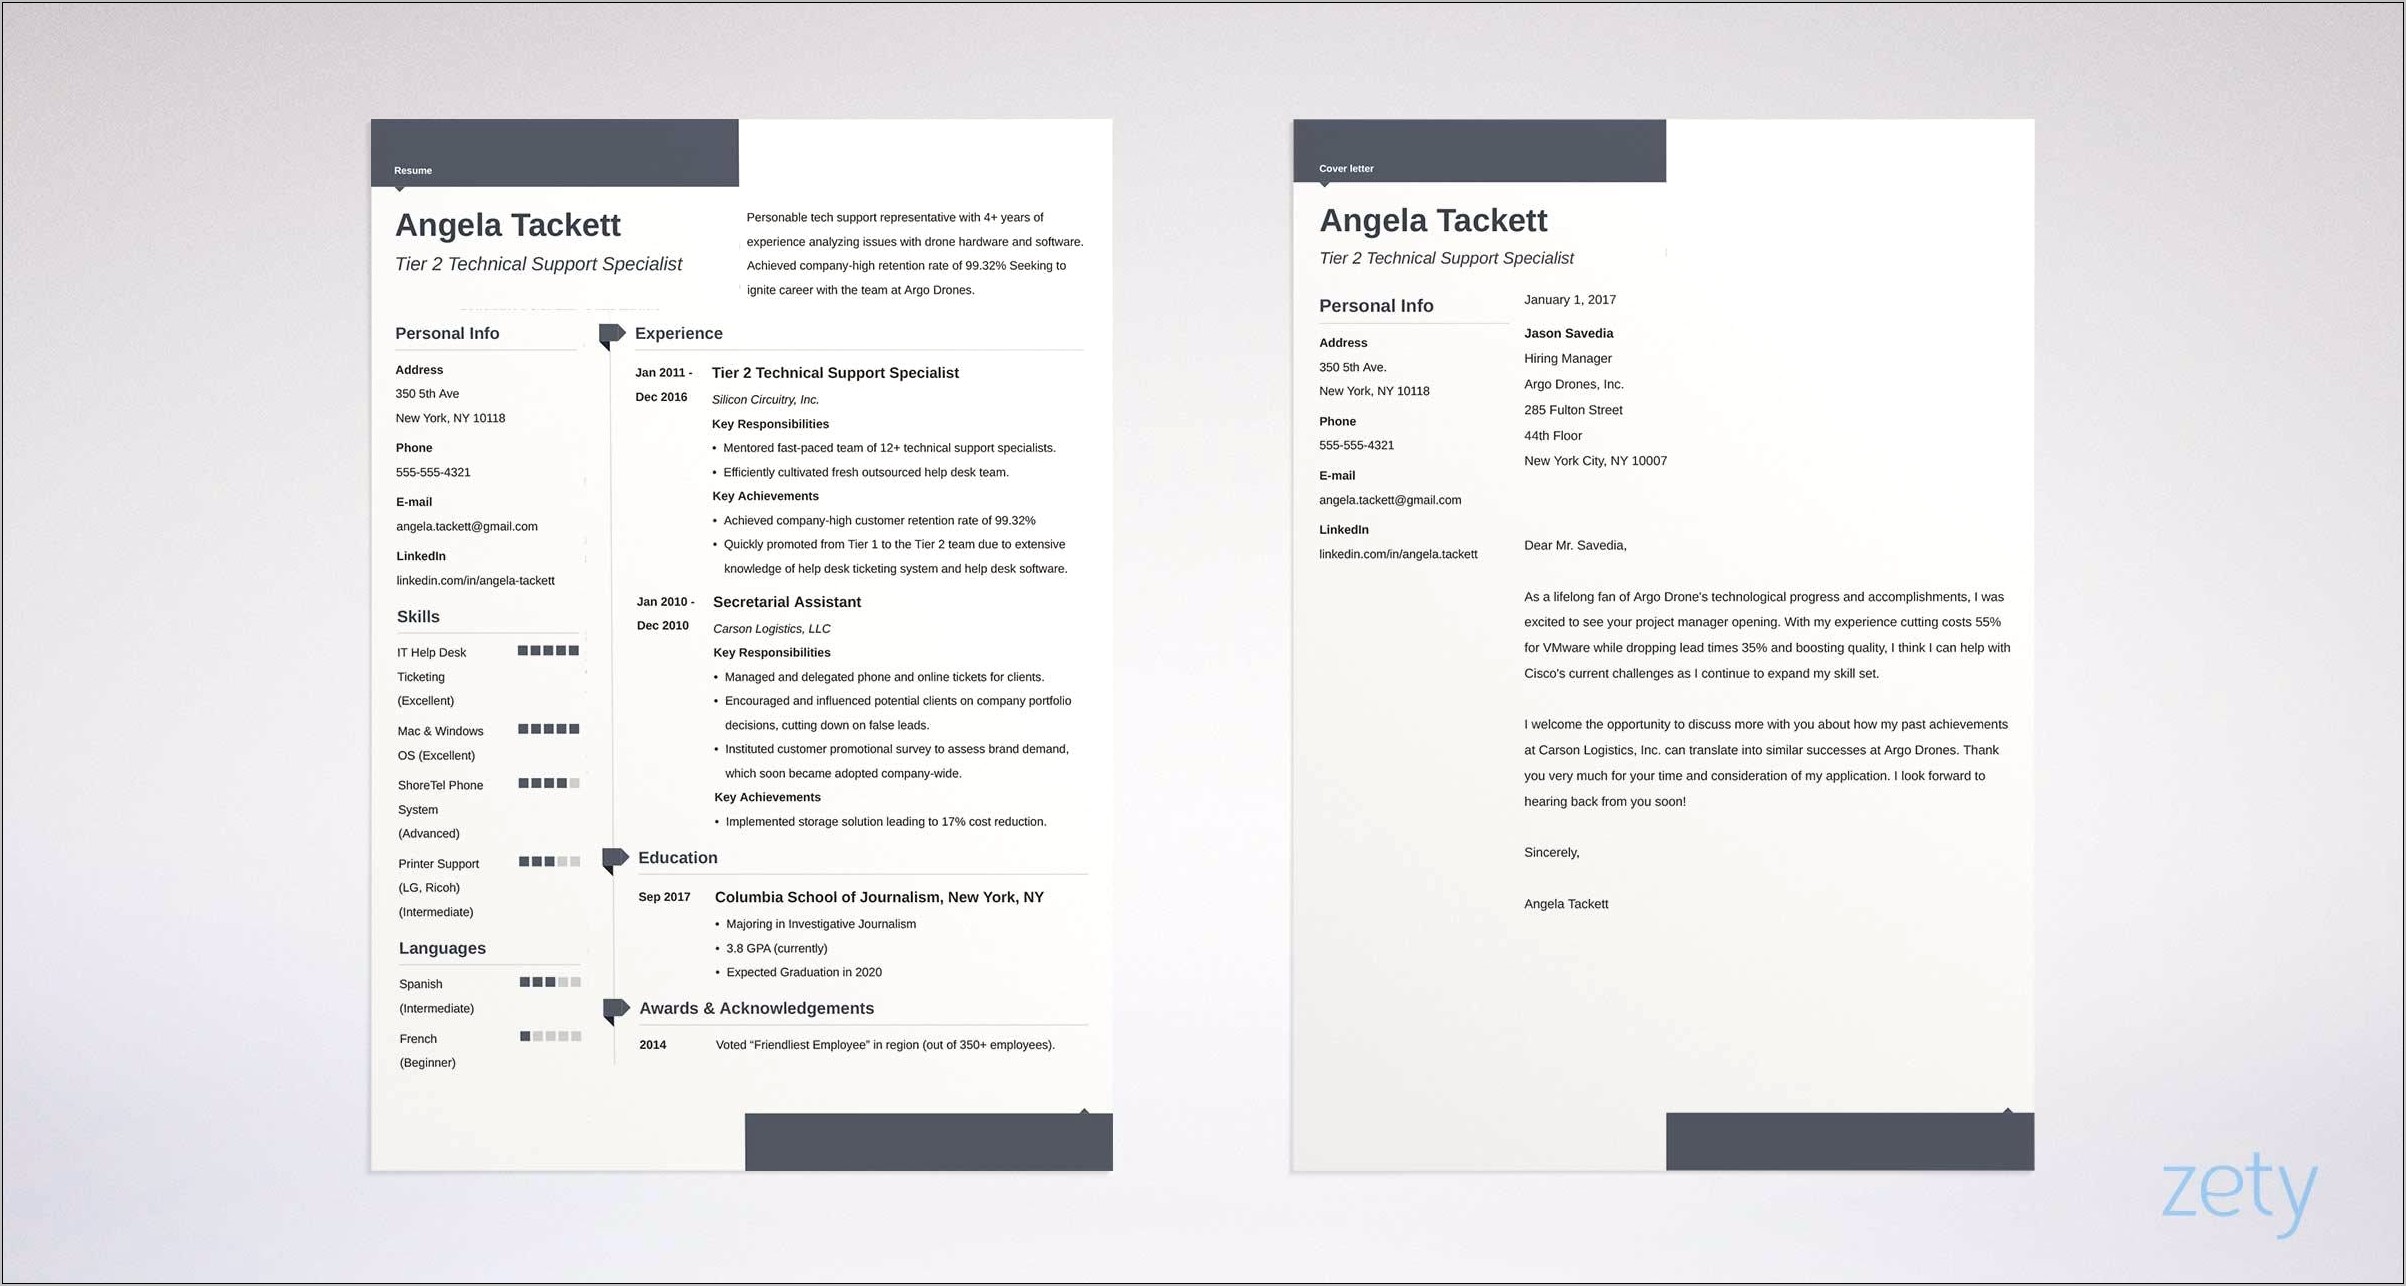 free resume templates microsoft word